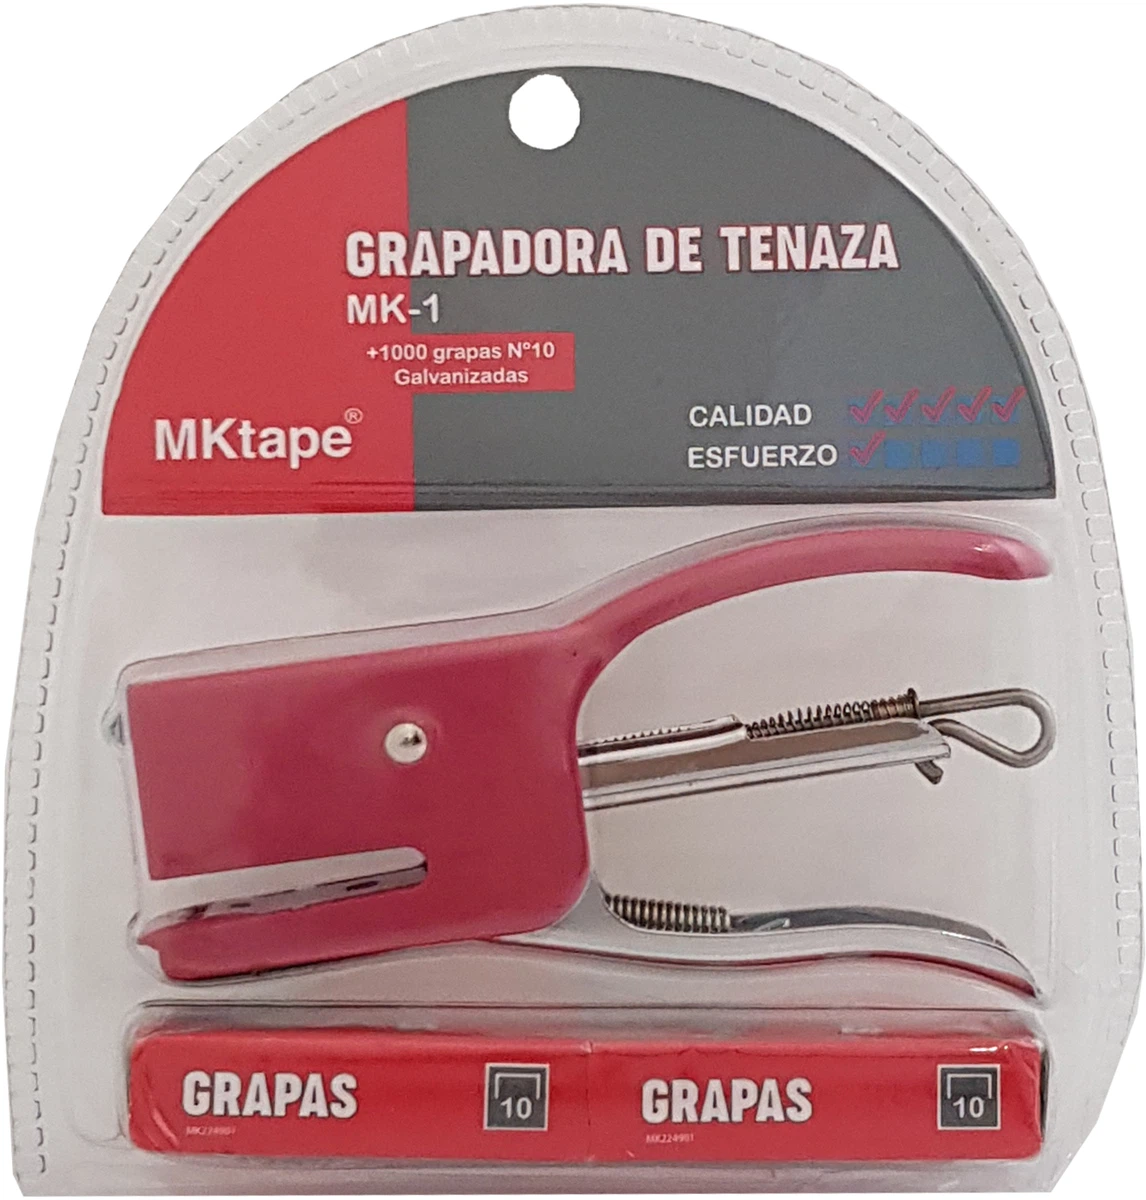 MKtape MK1 Pack de Grapadora de Tenaza Mini + 1000 Grapas Nº 10 - Hasta 12 Hojas - Color Rojo